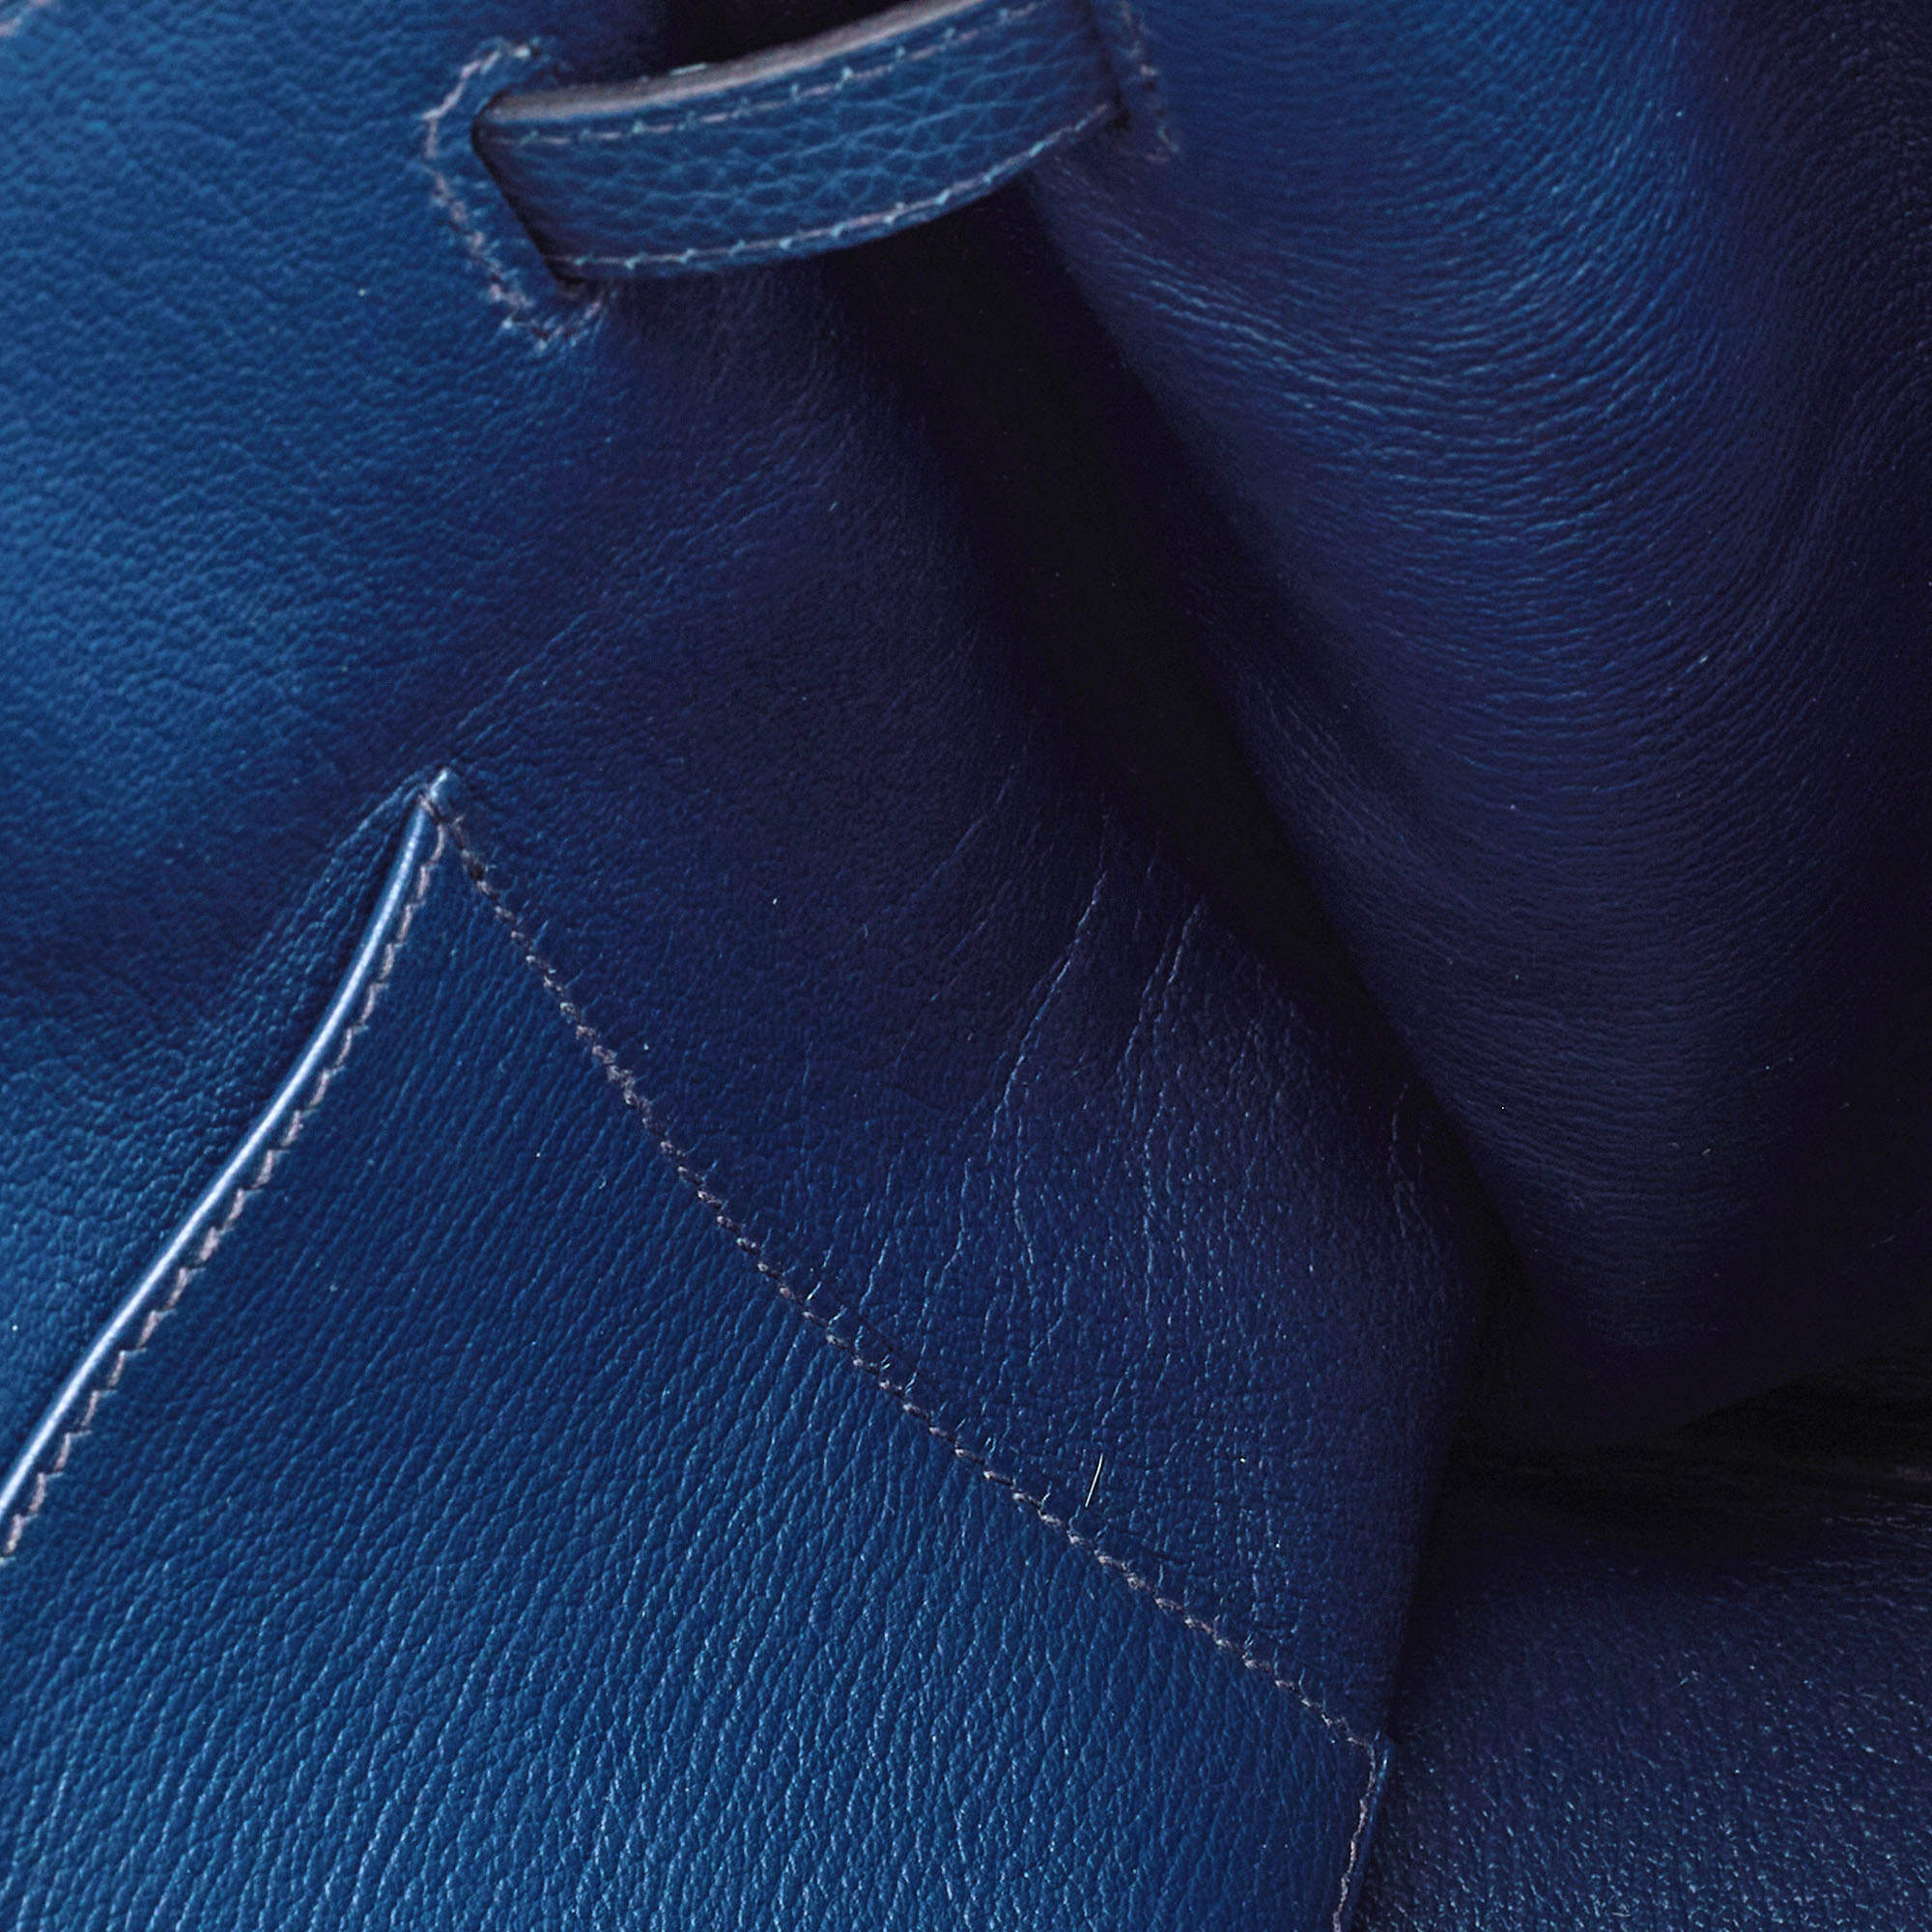 Hermès Limited Edition 50cm Bleu de Prusse Togo Leather Endless